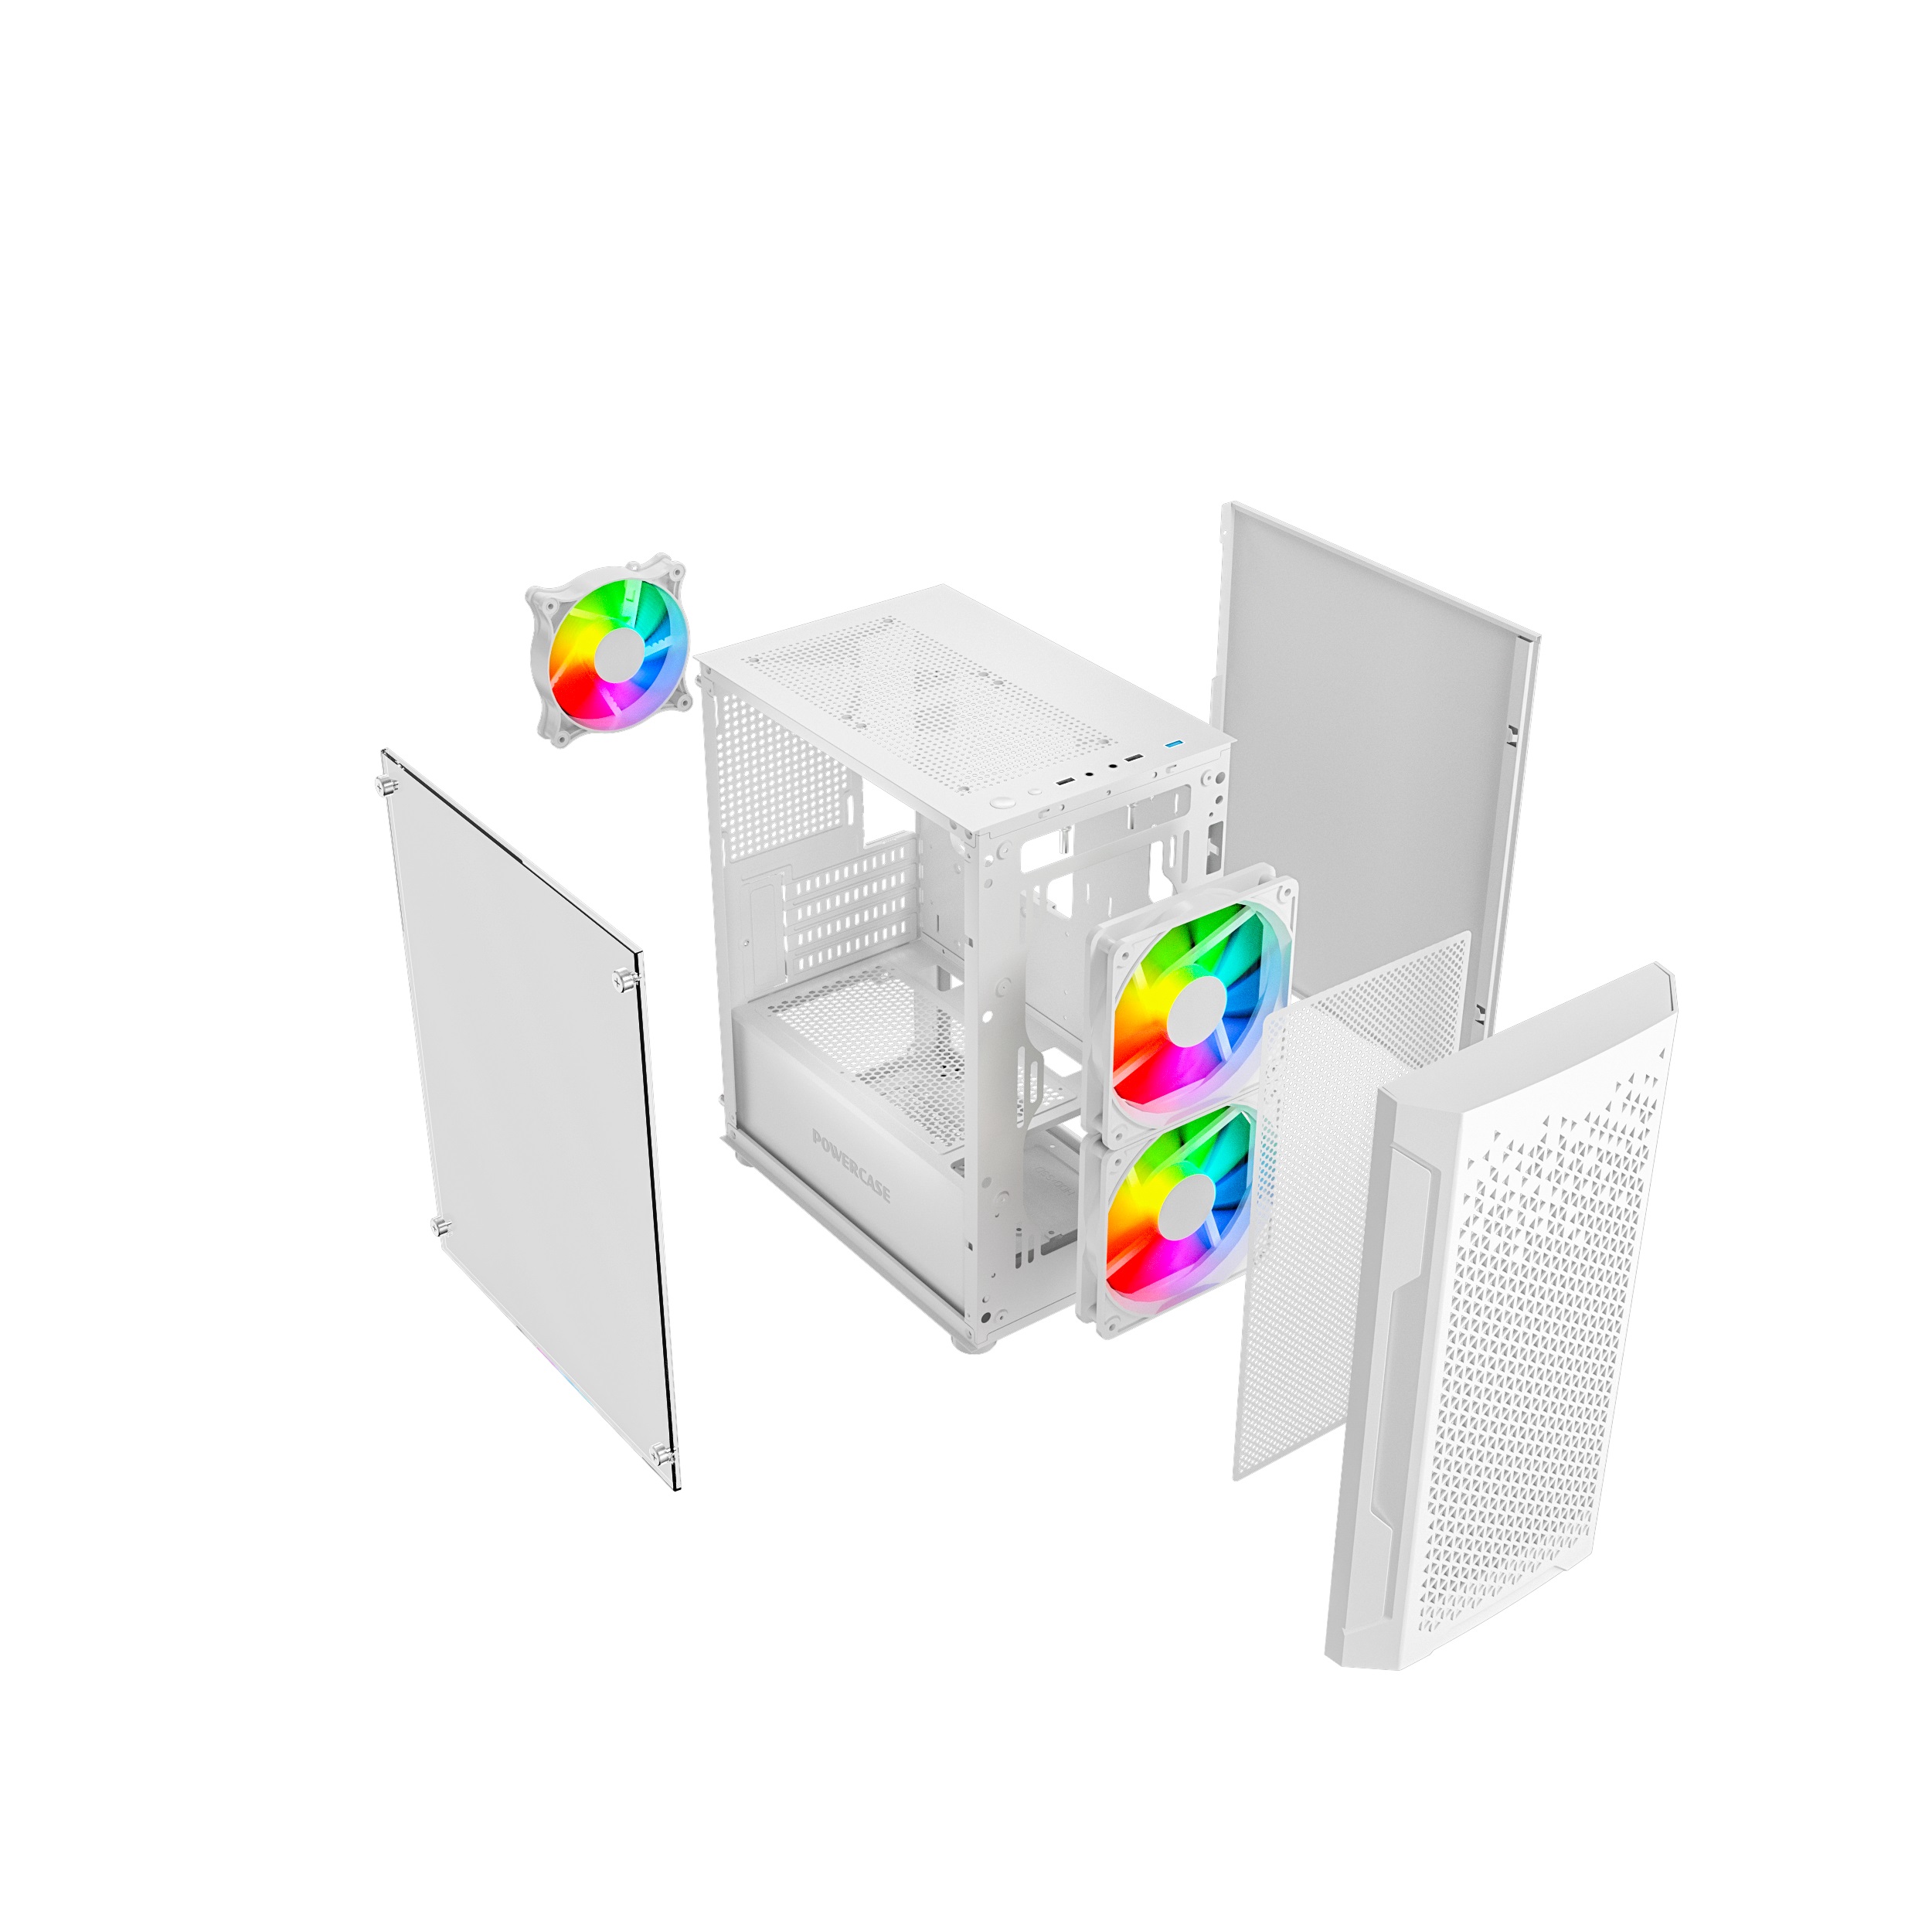 Корпус Powercase Mistral Micro Z3W Mesh LED, Tempered Glass, 2x 140mm + 1х 120mm 5-color fan, белый, mATX  (CMIMZW-L3)